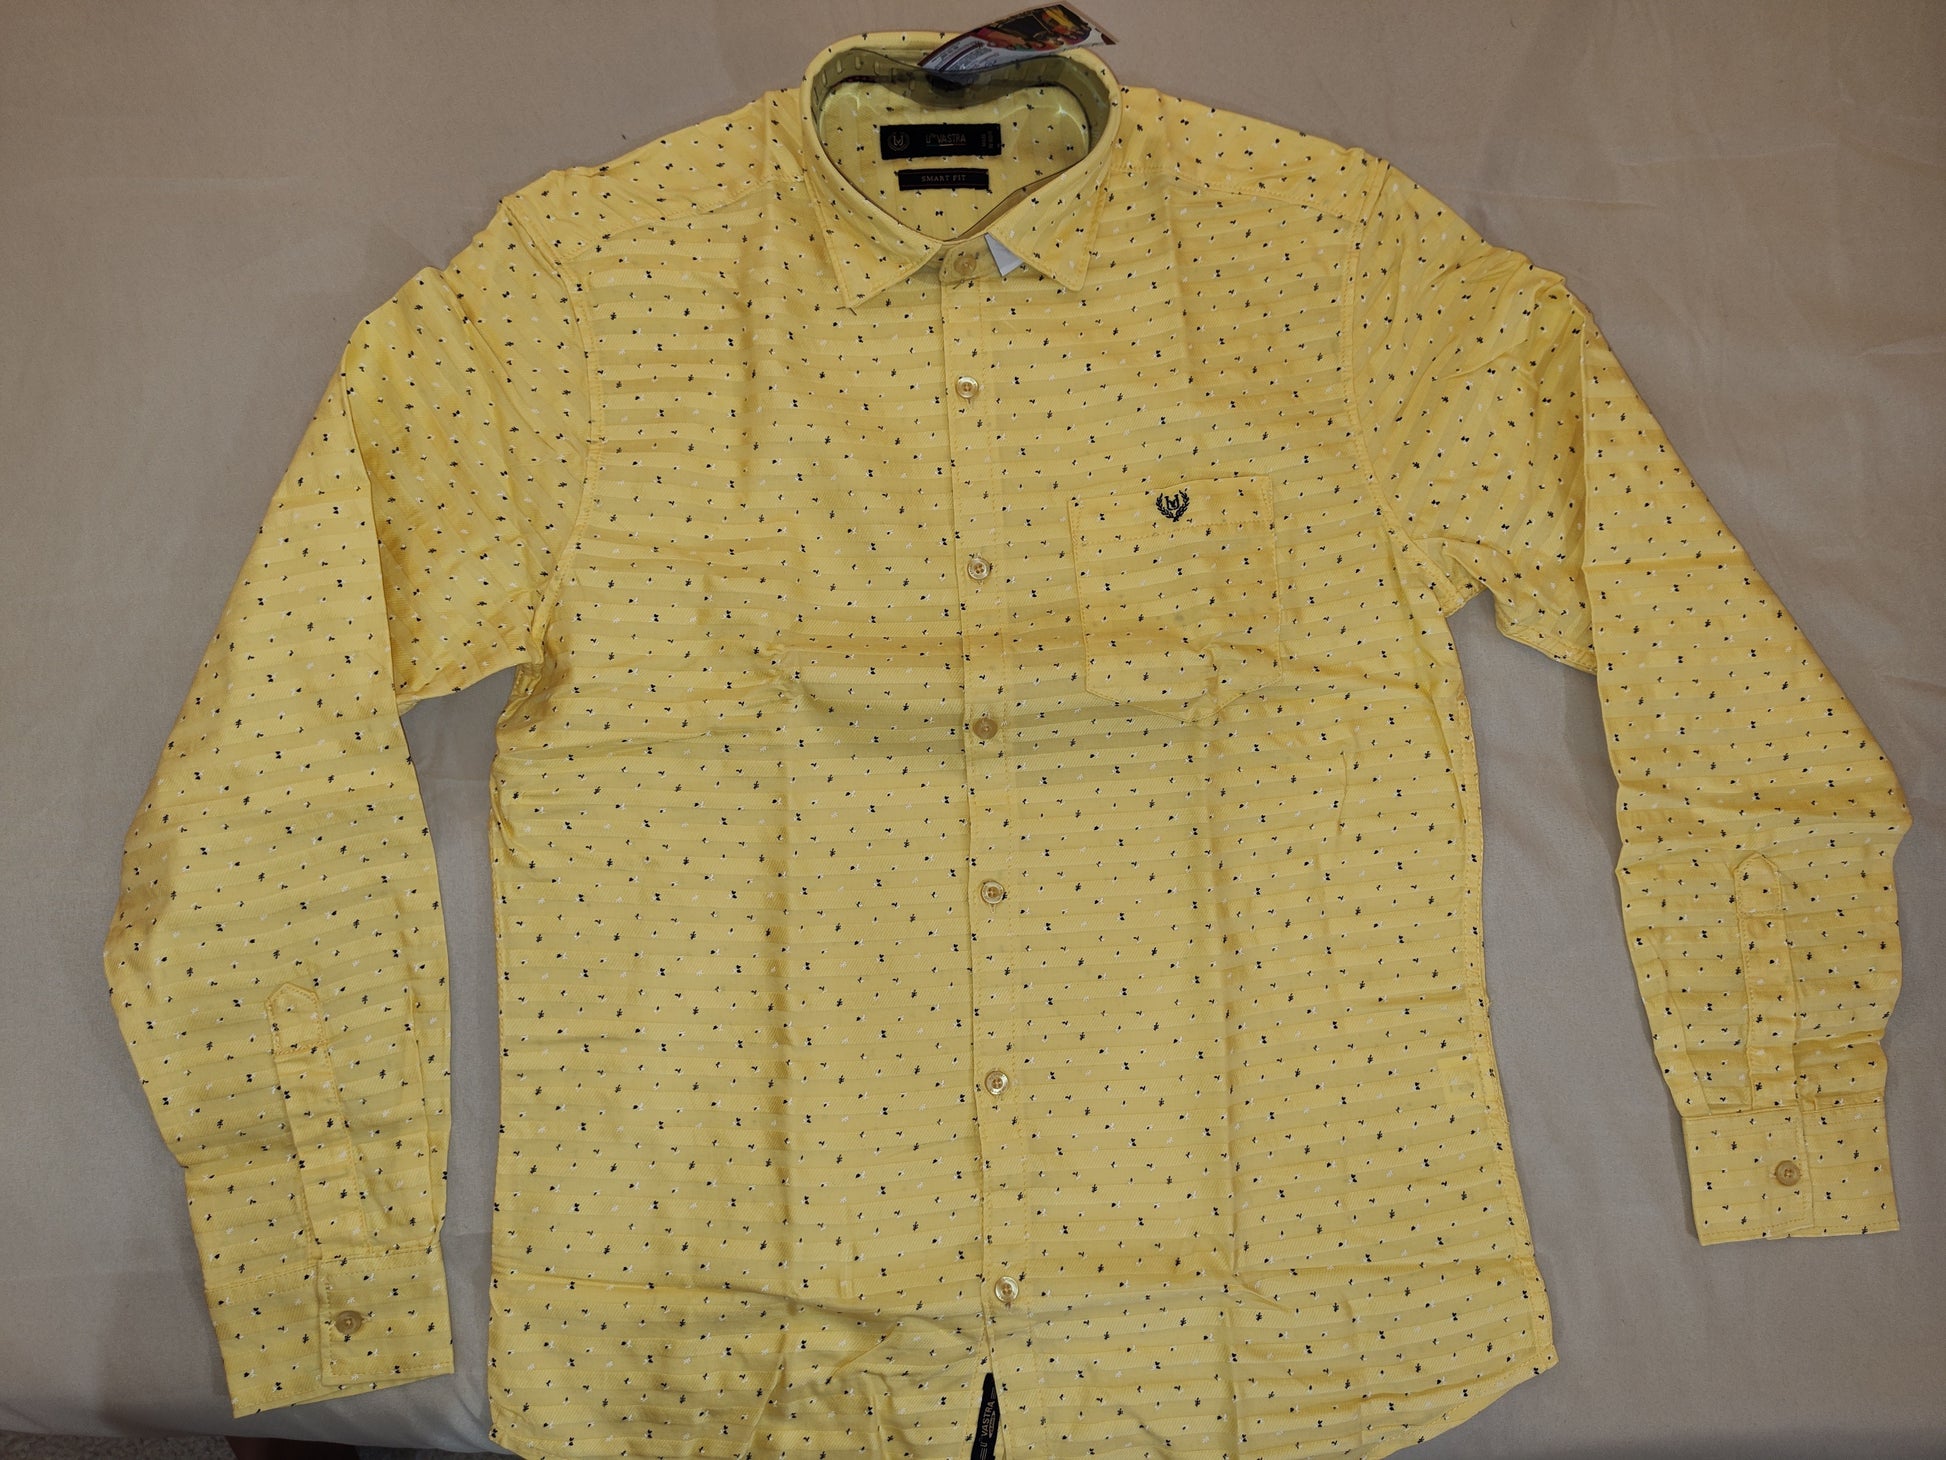 Attractive Light Yellow Full Sleeve Shirt For Men